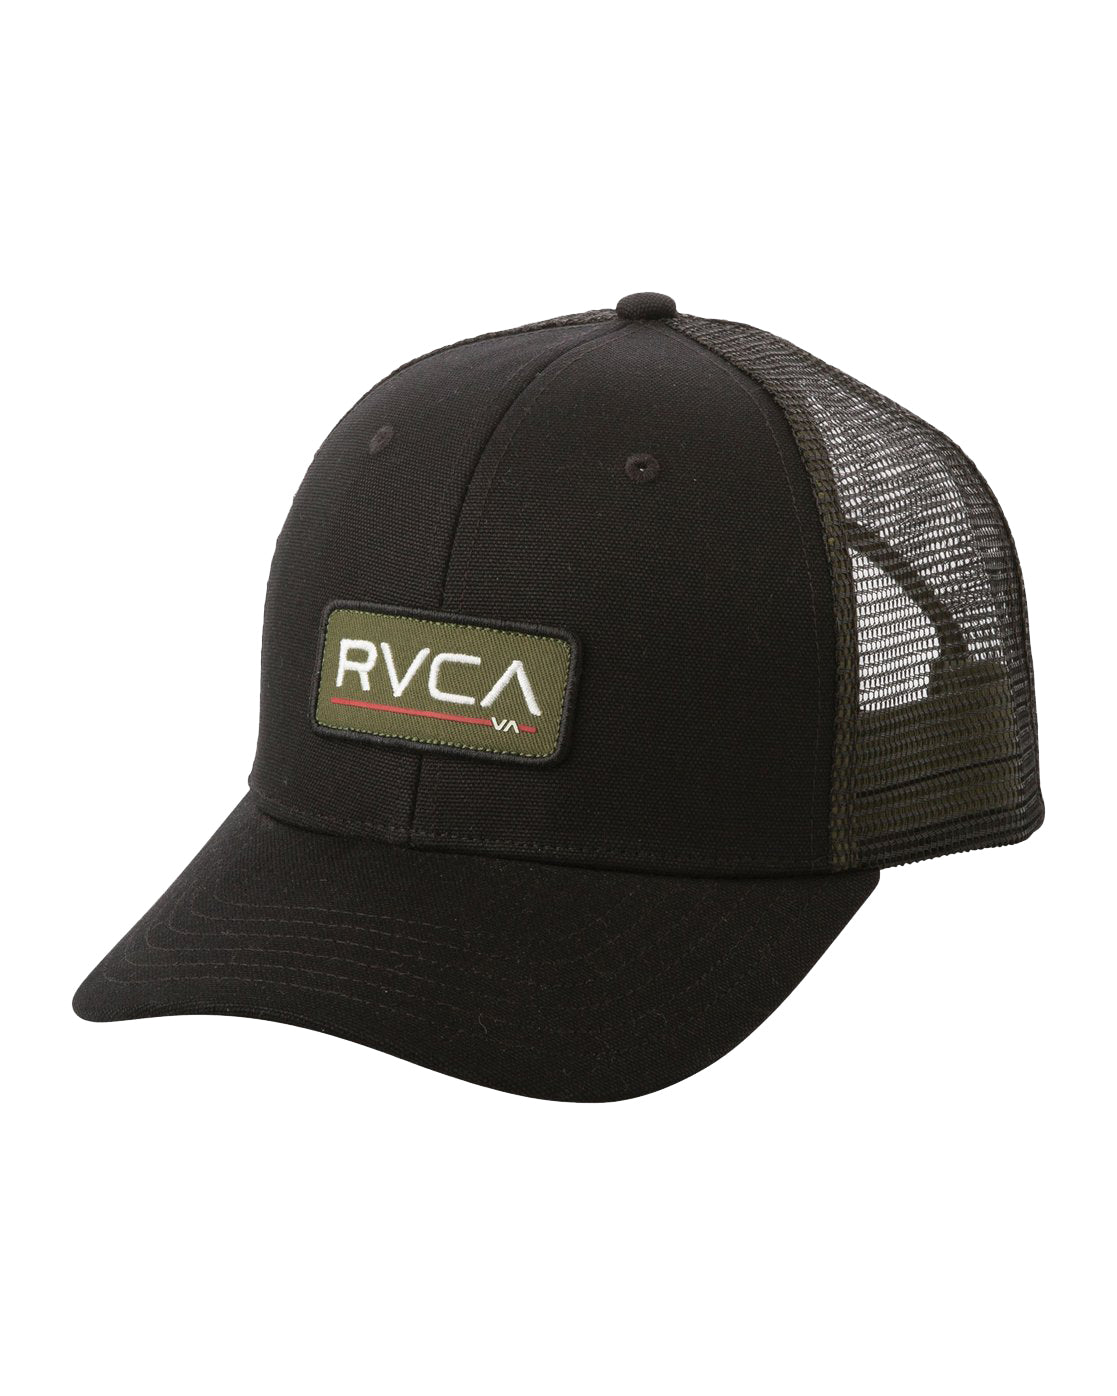 RVCA Ticket Trucker Hat BOL-BlackOlive OS